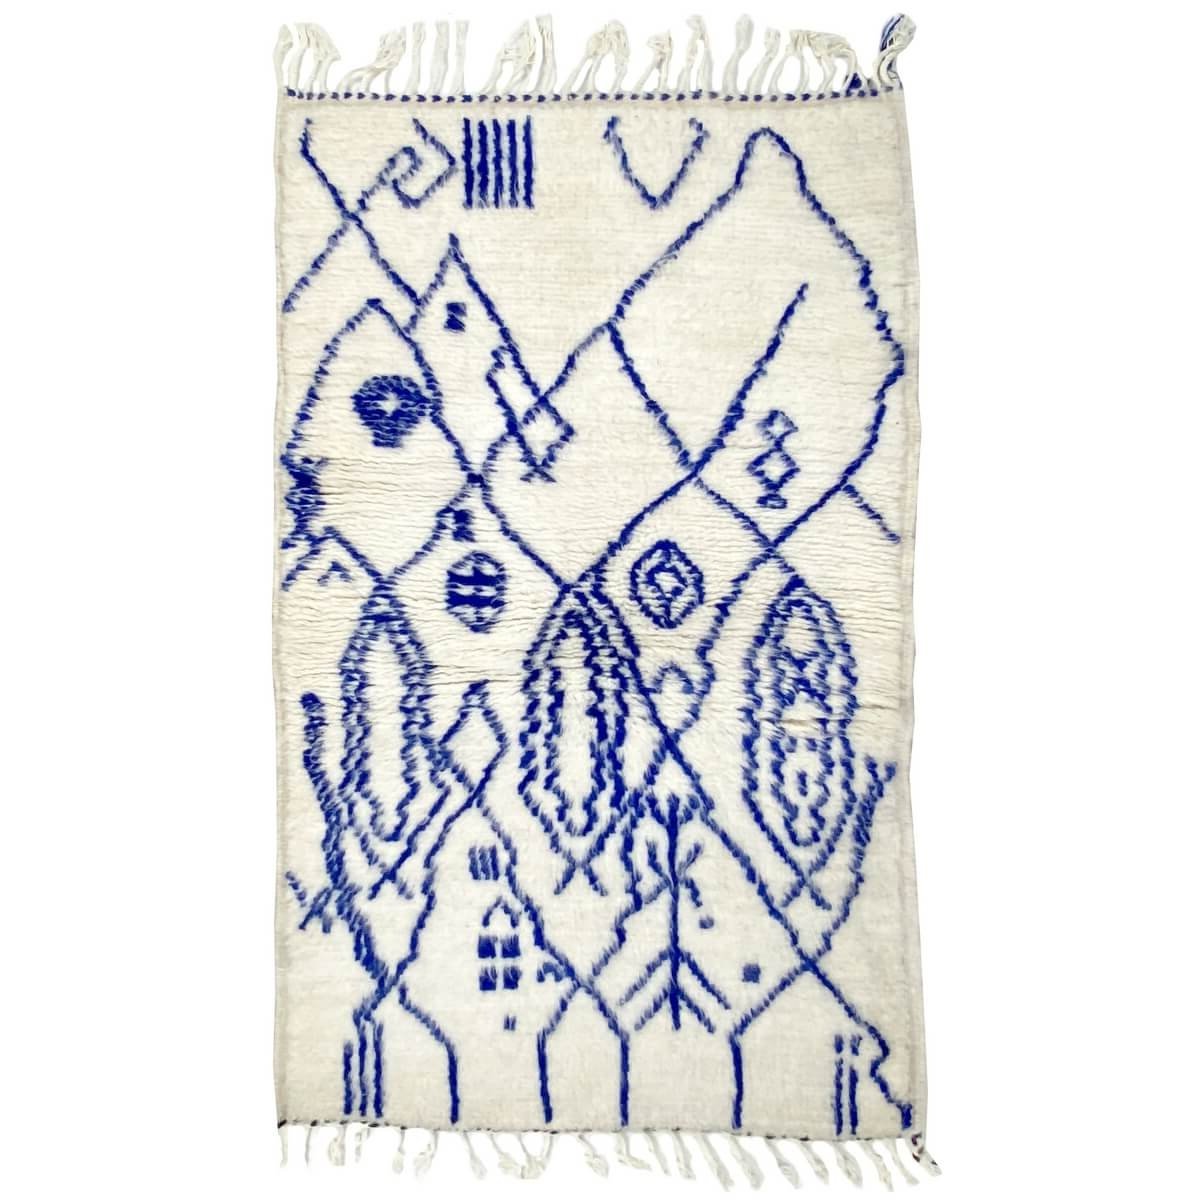 Berber carpet Rug Azilal Oukwes 80x135 cm White and Blue (Handmade, Wool, Morocco) Tunisian margoum rug from the city of Kairoua